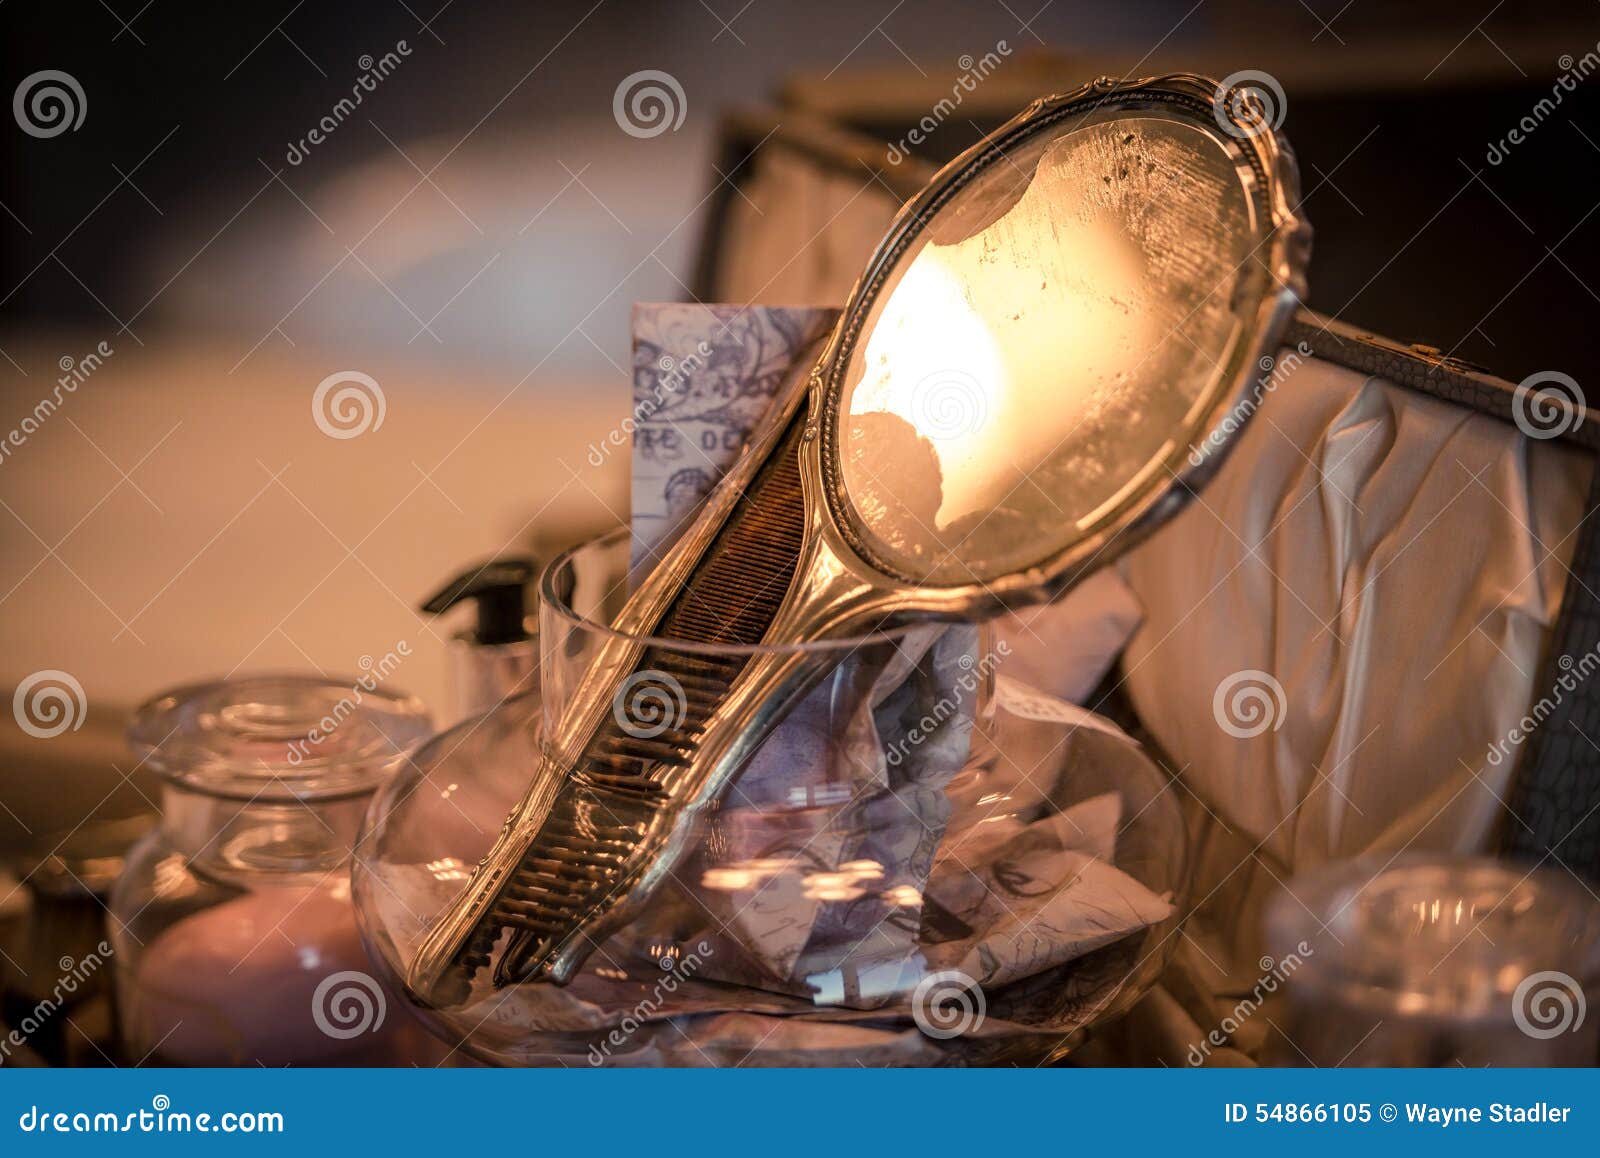 ladies vanity mirror in classic setting